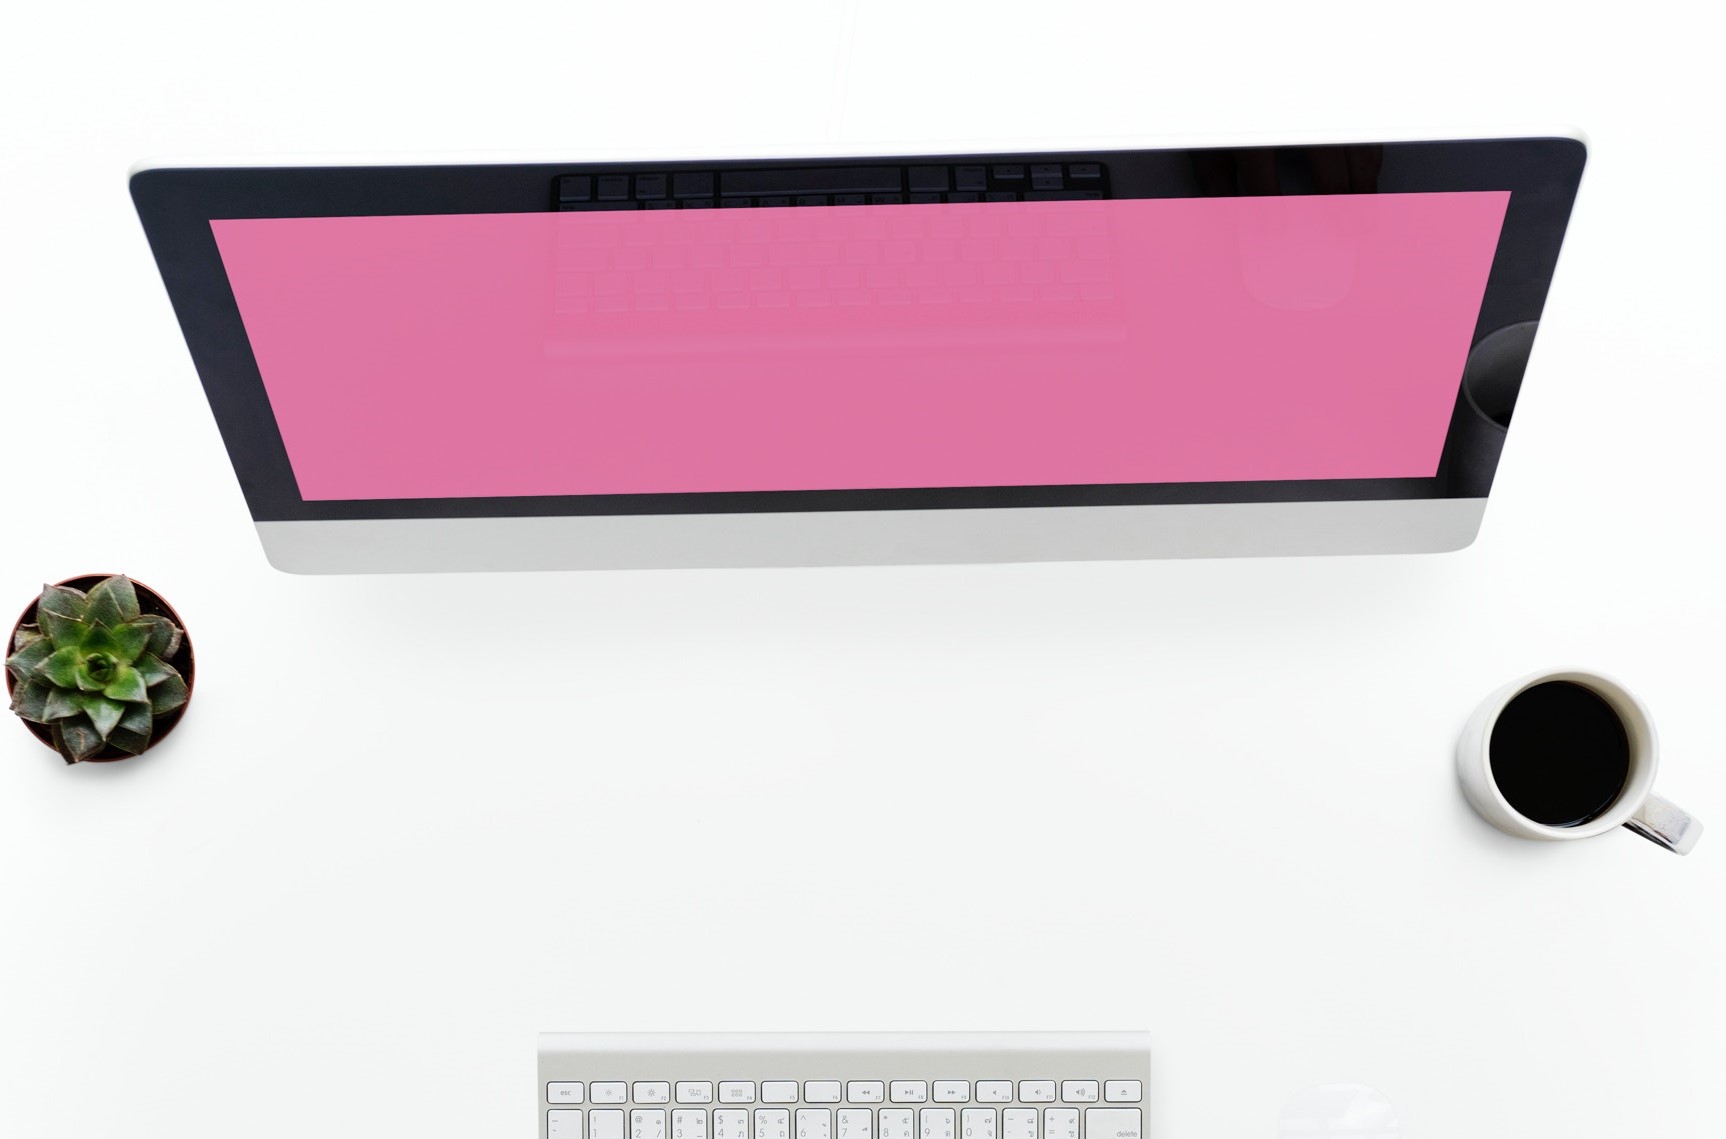 Pink screen and keyboard